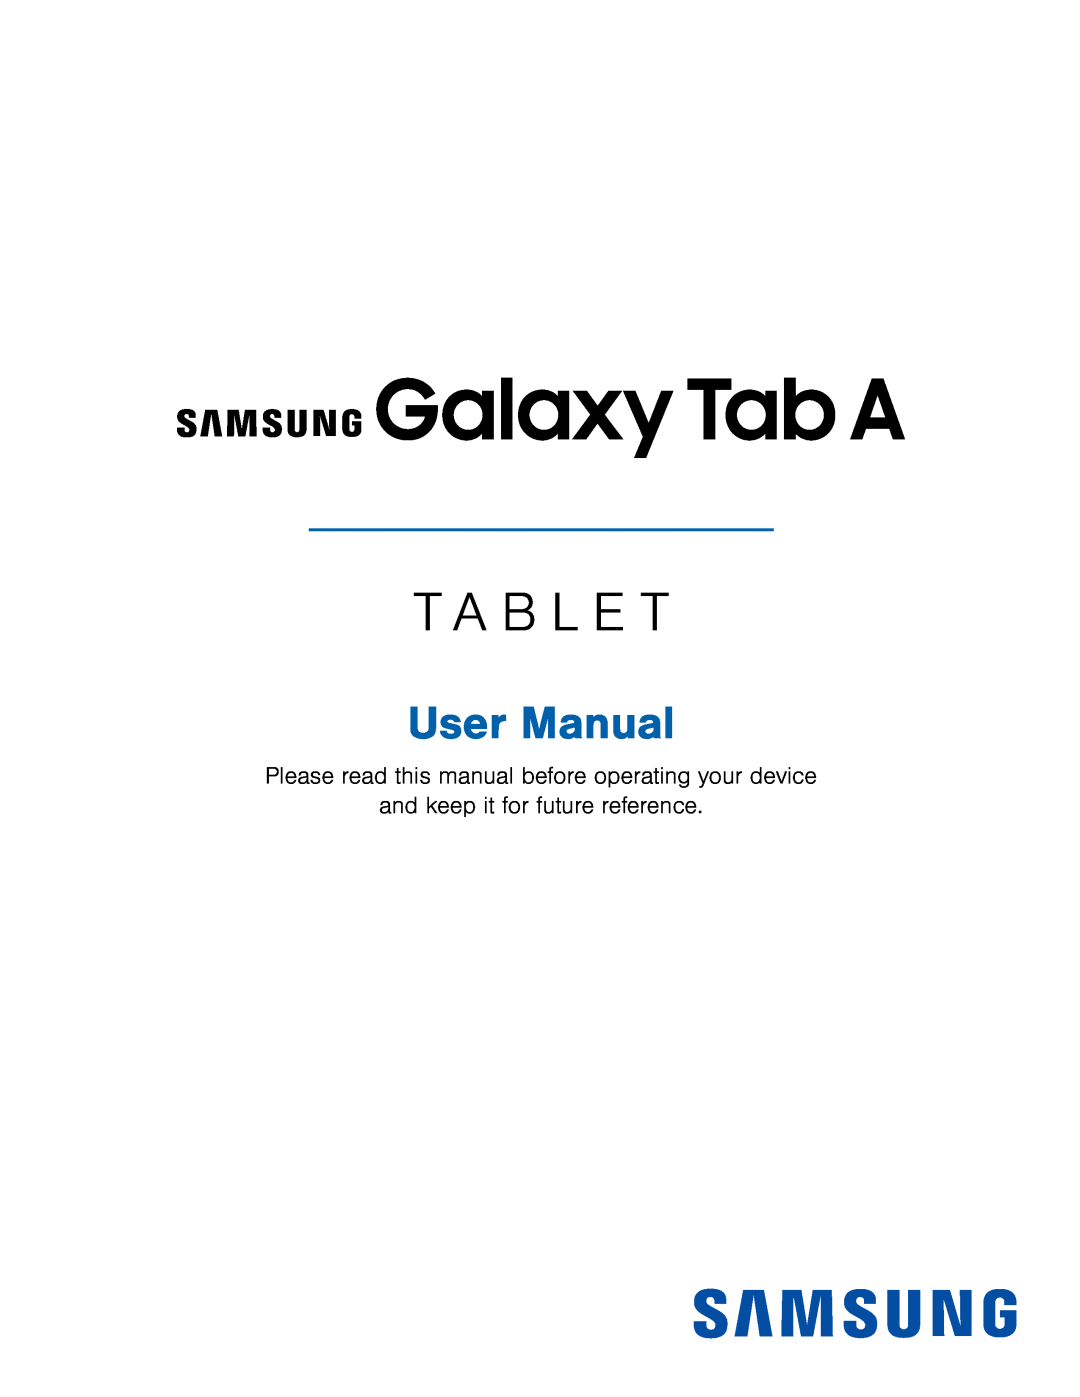 Galaxy Tab A 8.0 T-Mobile